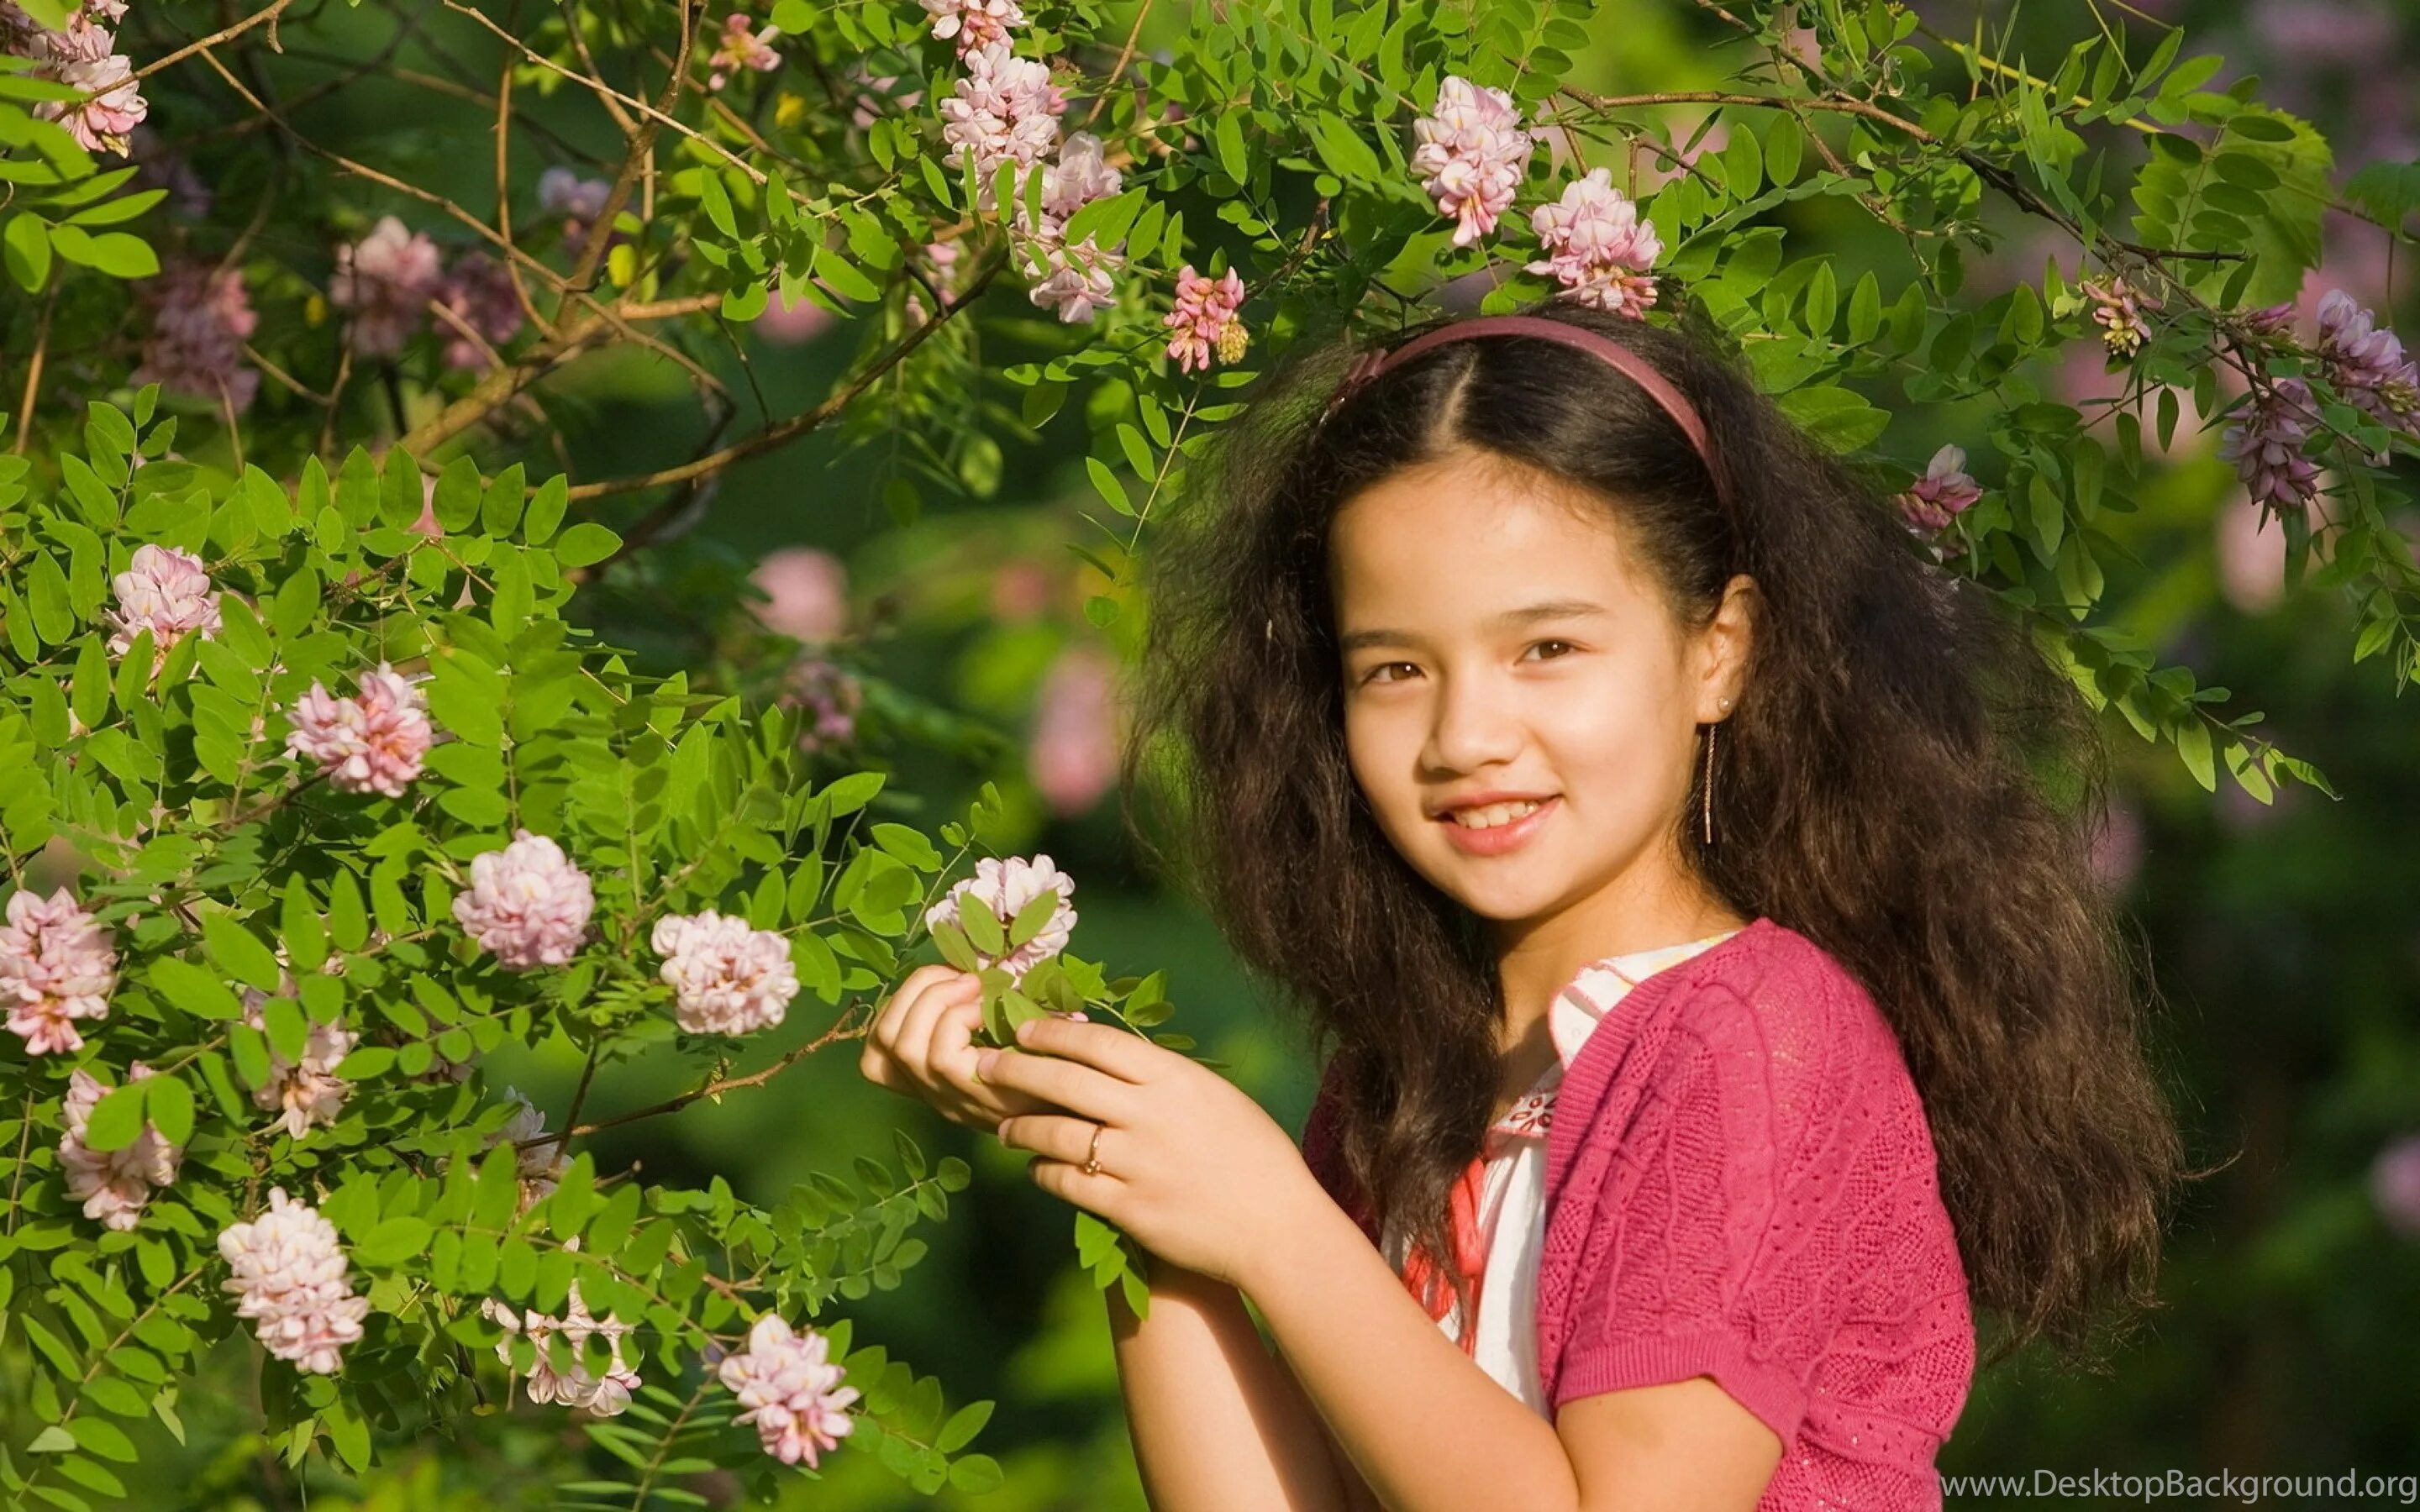 Little girl 8 12 private tabu. Девочка на природе. Дети и природа. Девочки подростки на природе. Девочка 10 лет на природе.